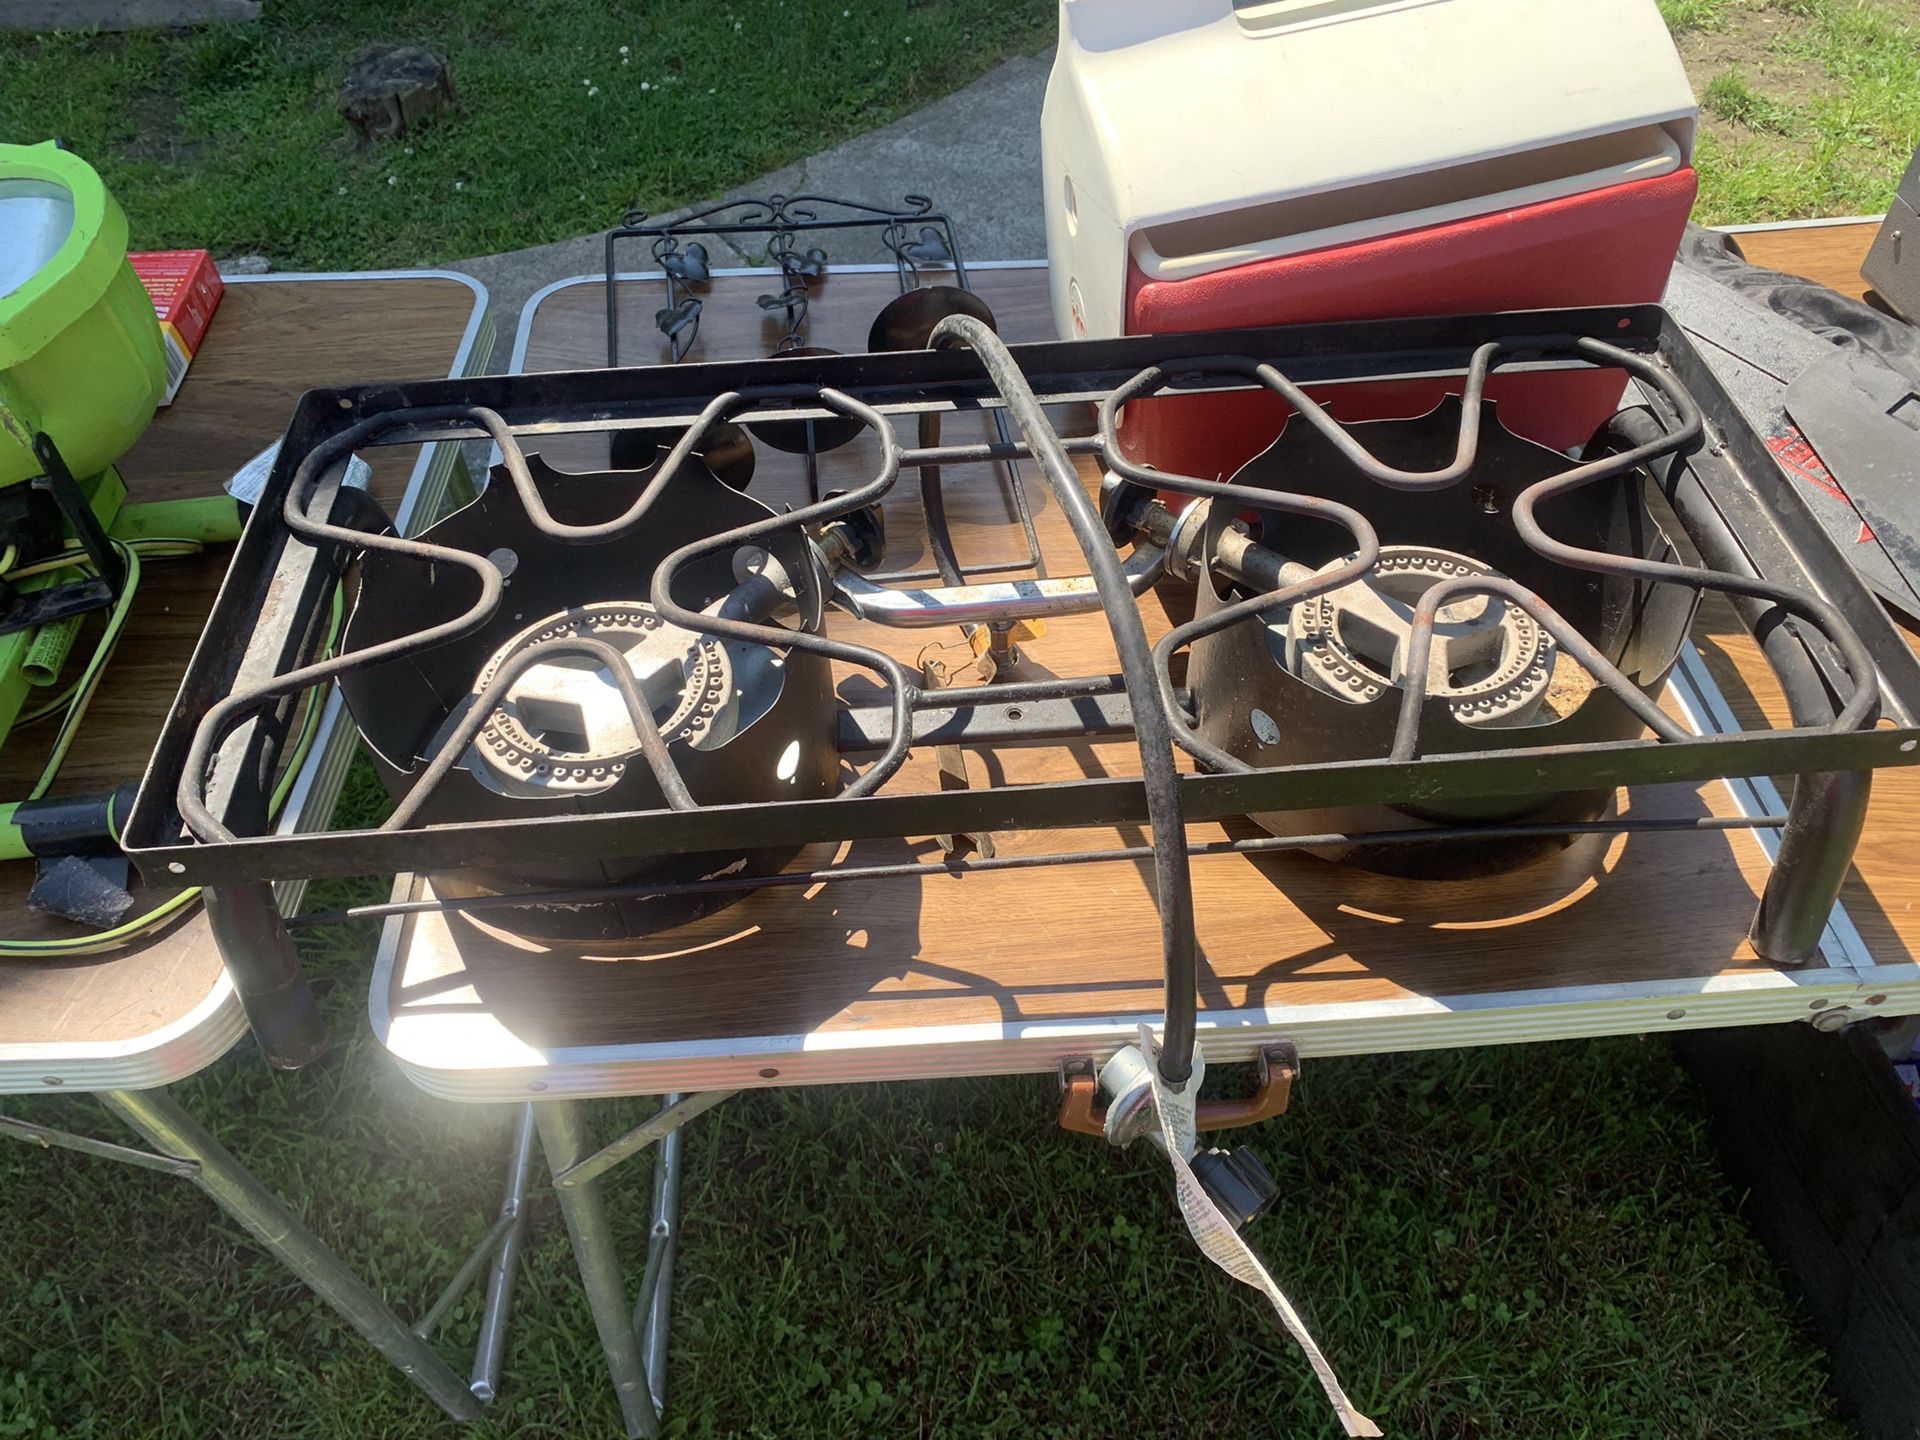 Propane stove outdoors